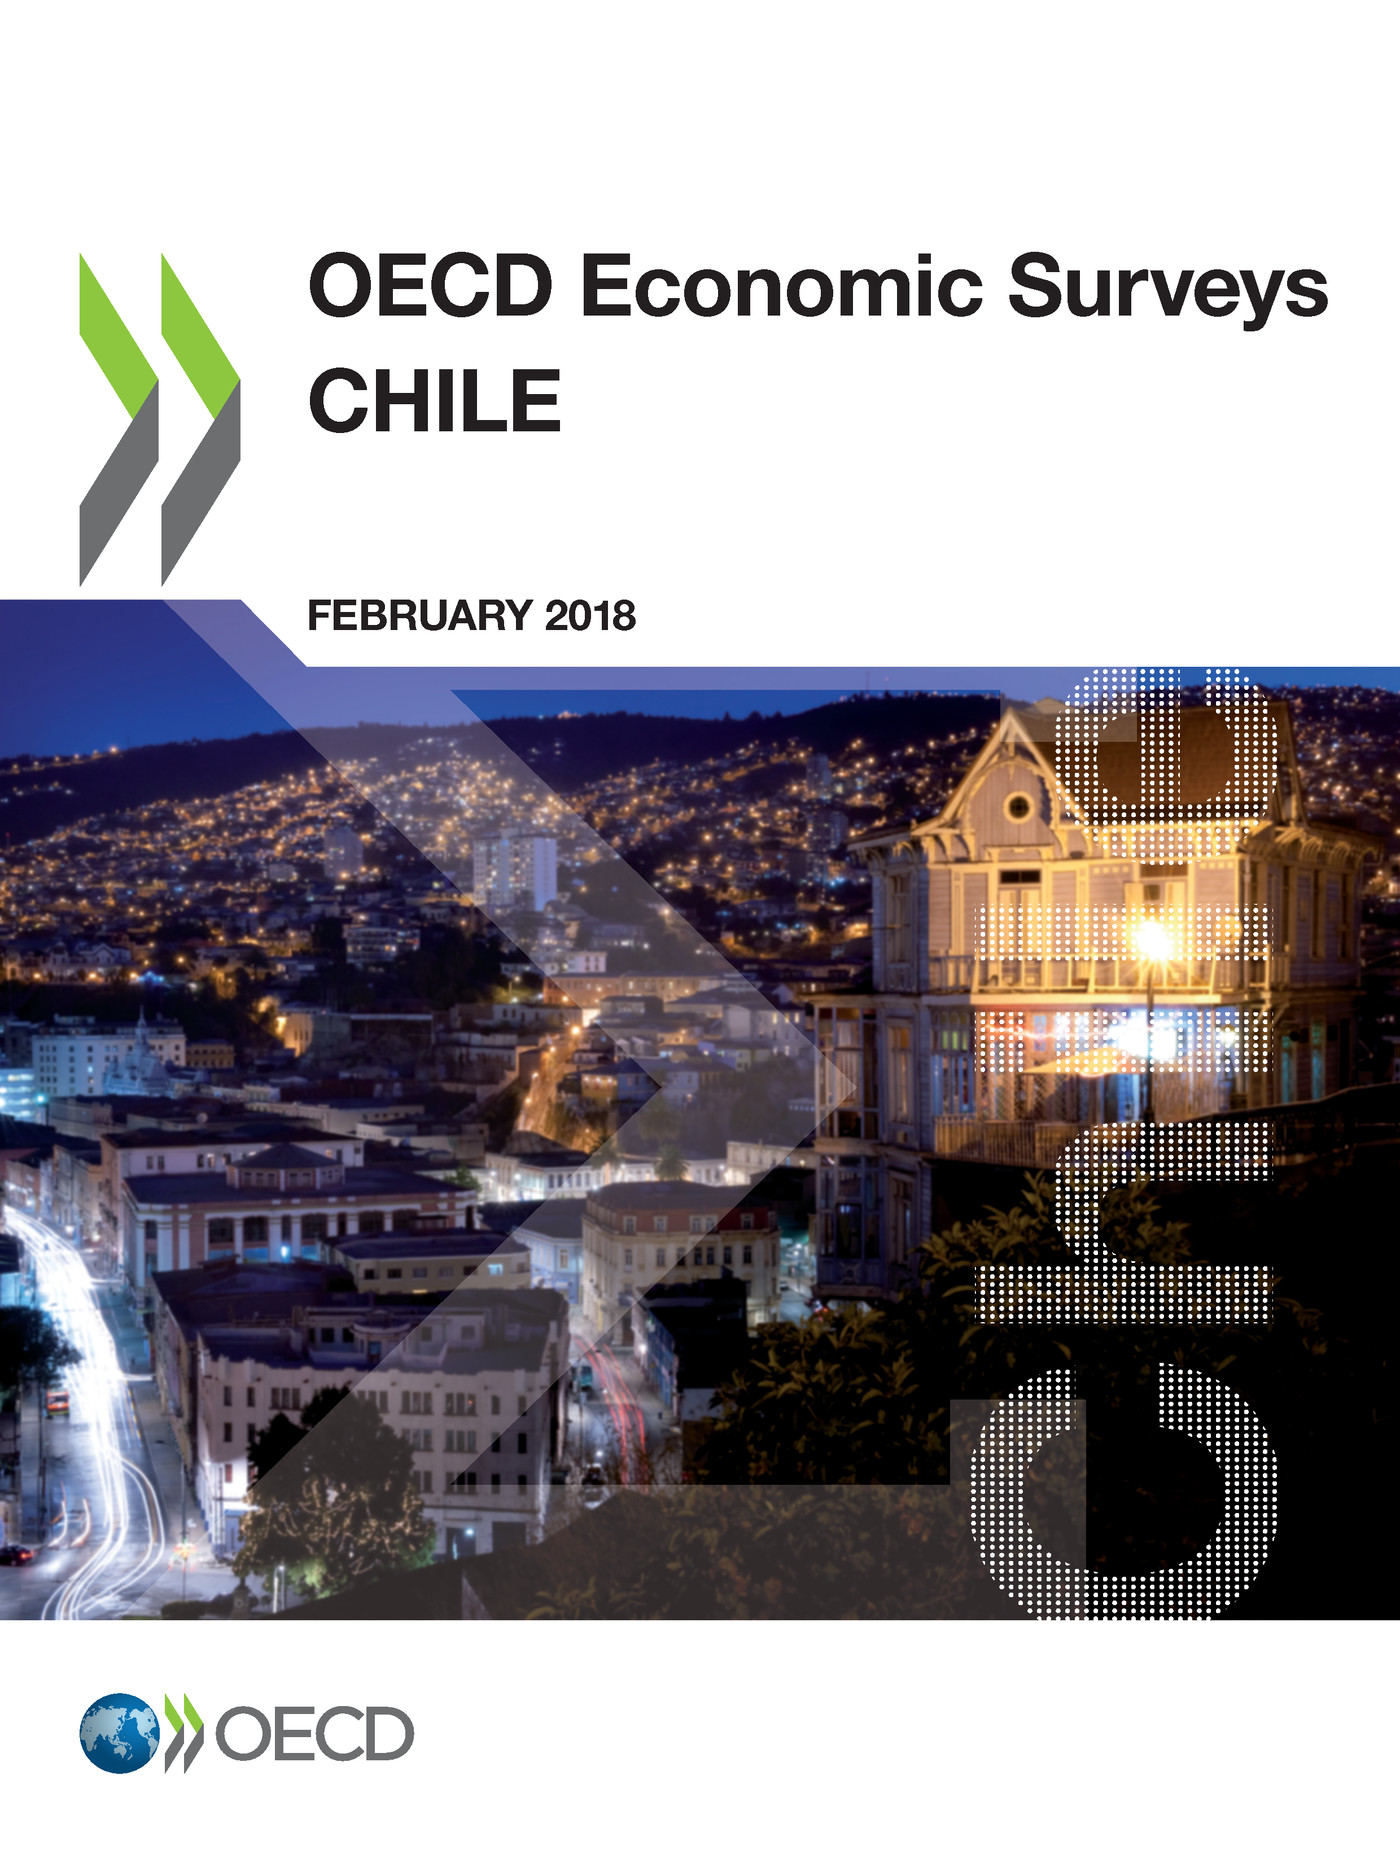 OECD Economic Surveys: Chile 2018 -  Collectif - OCDE / OECD